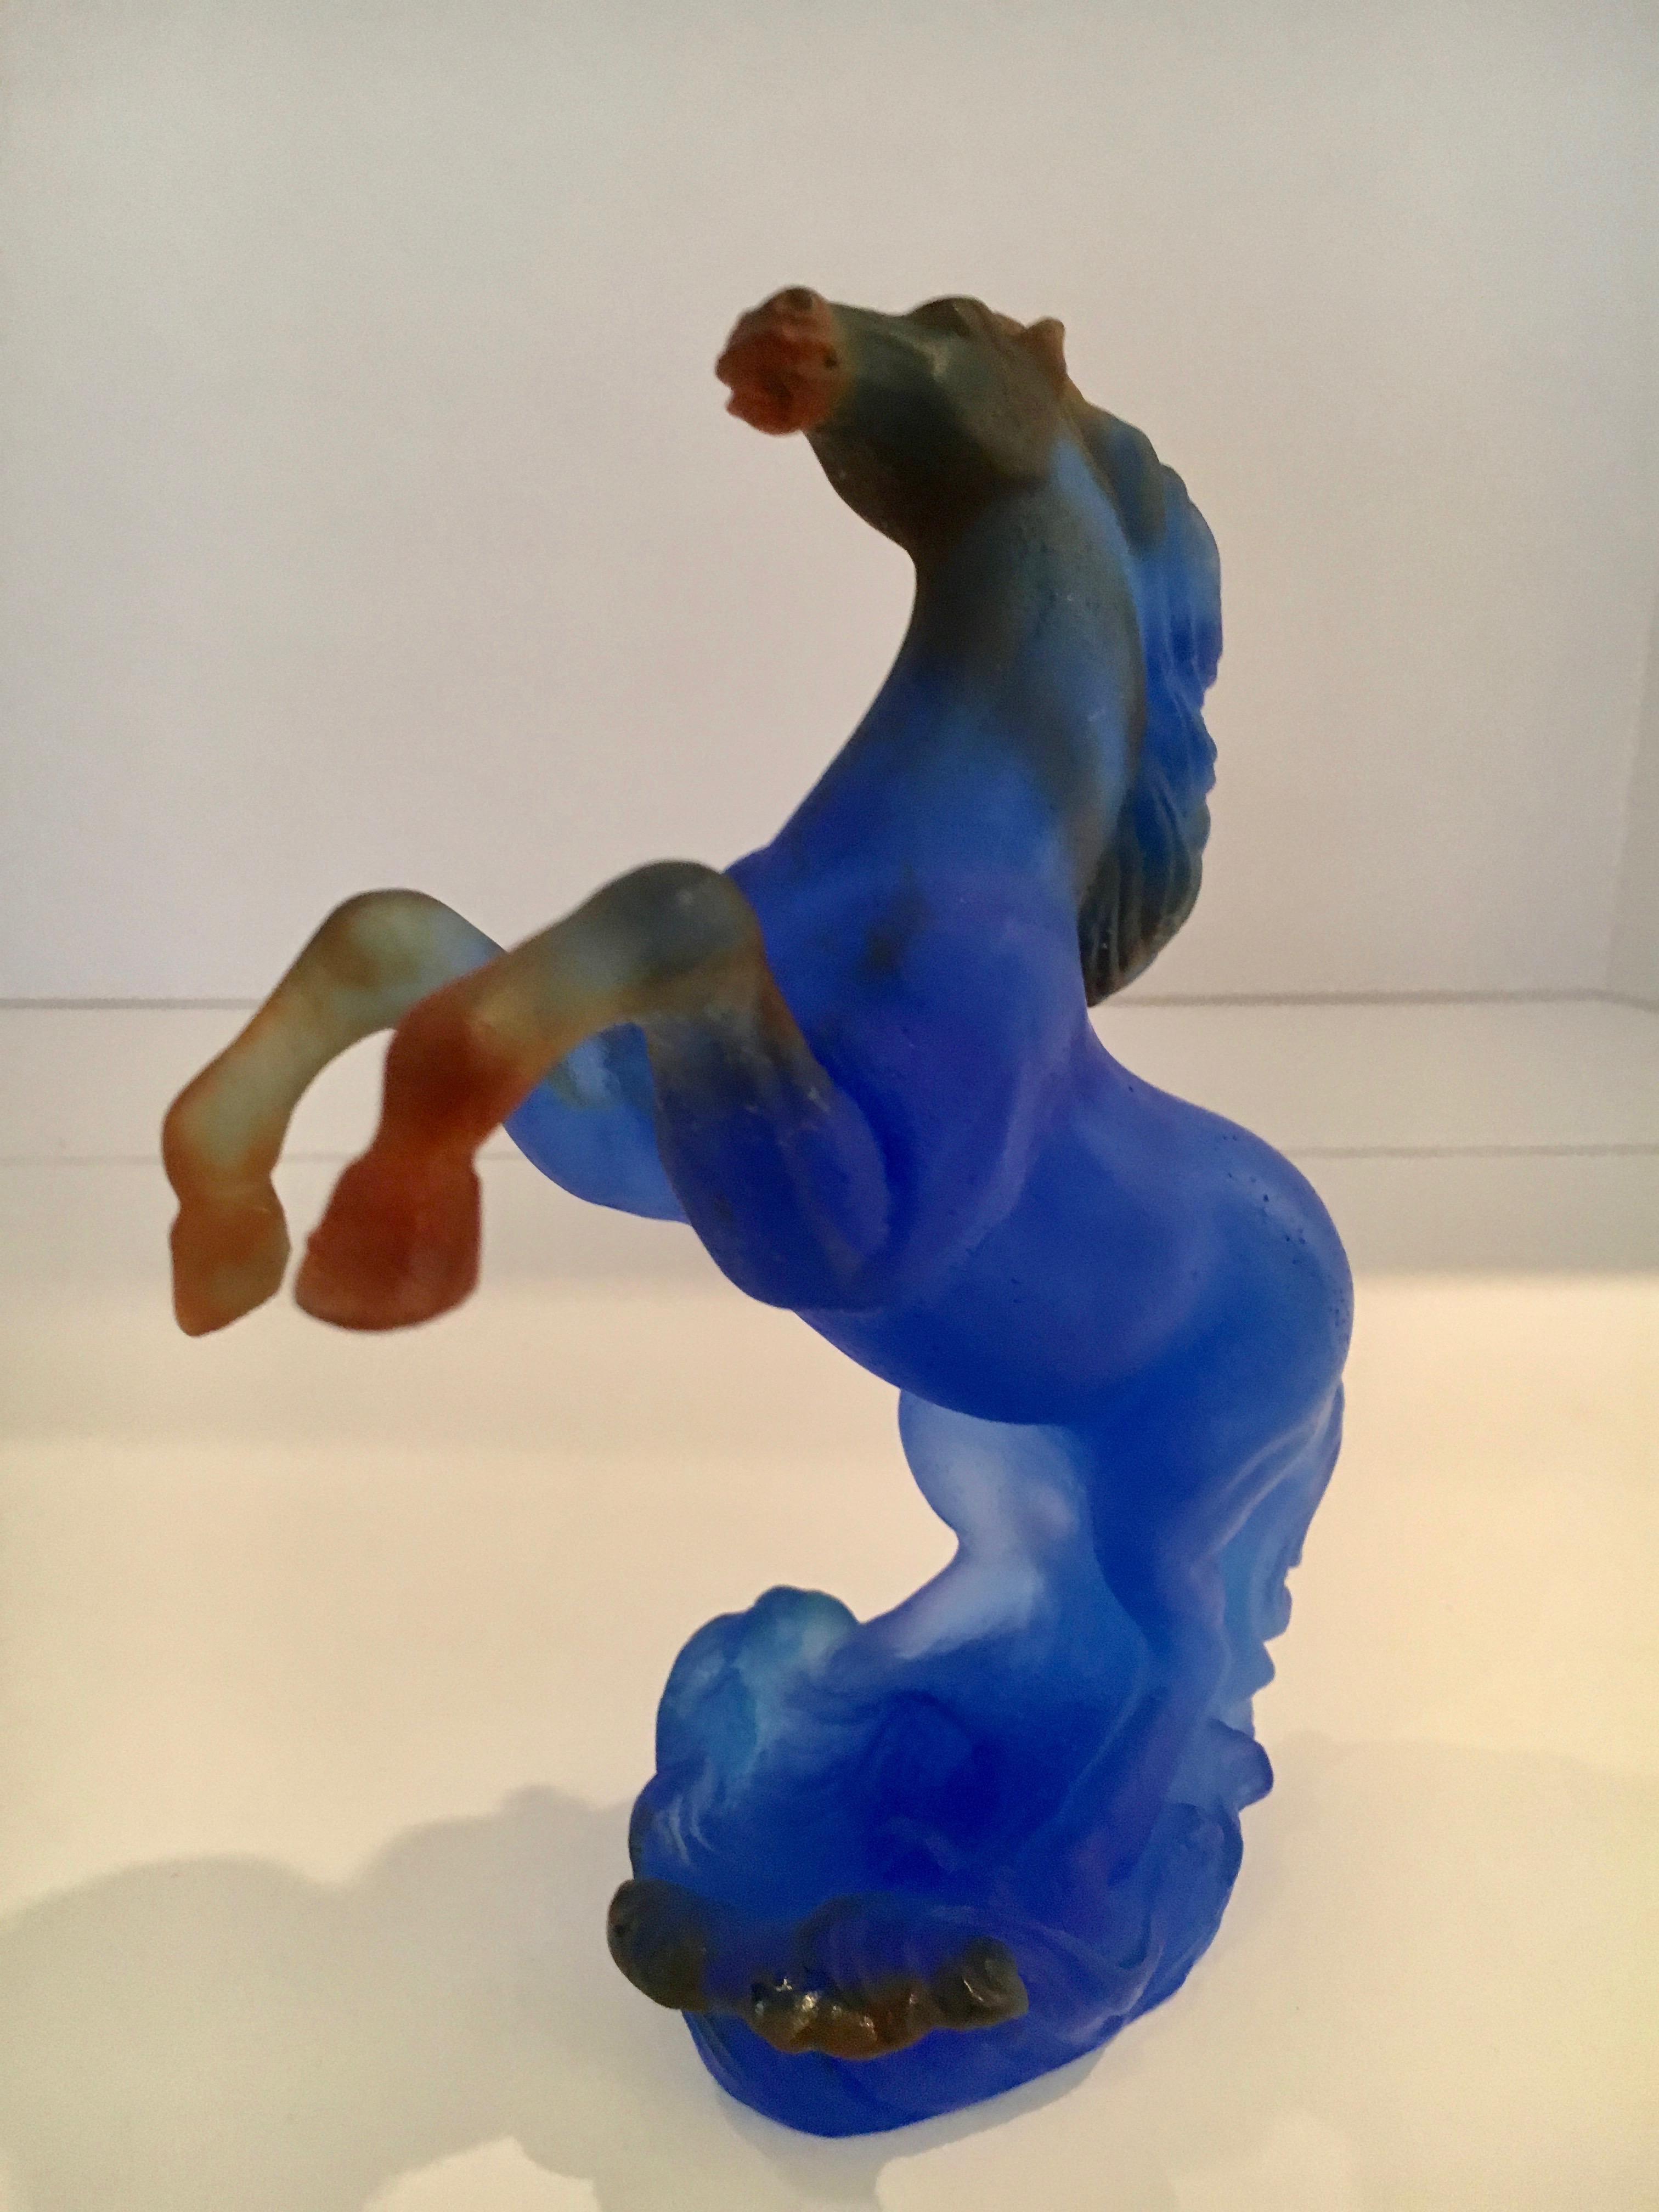 Blue Daum rearing horse sculpture.